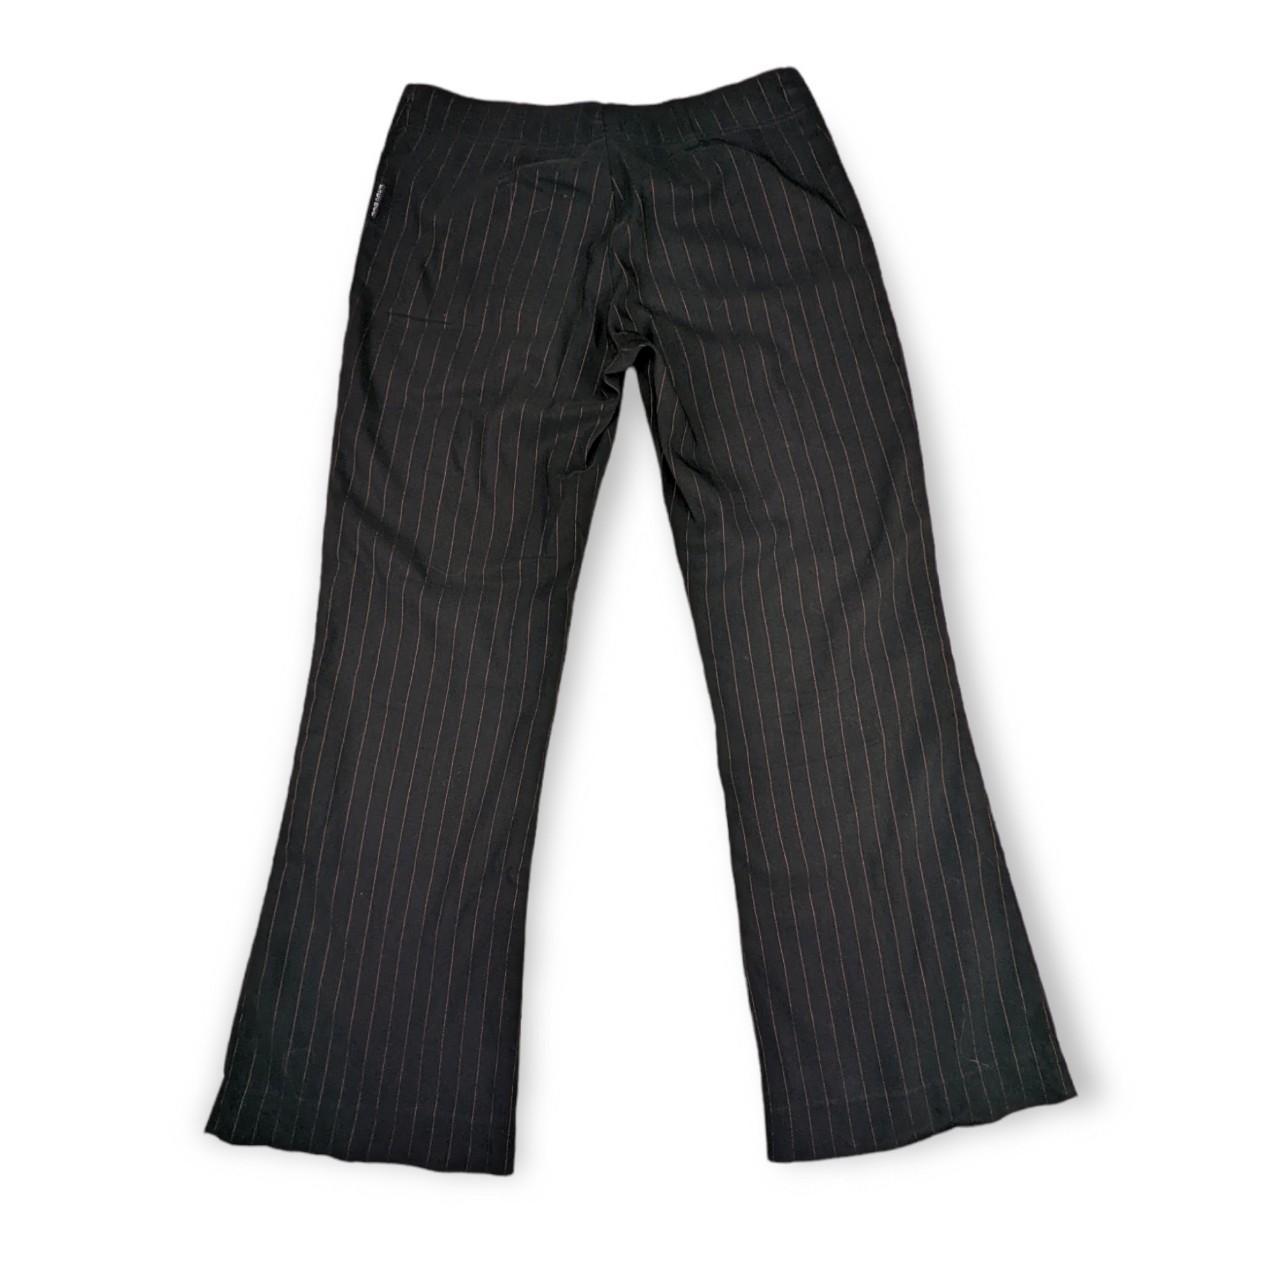 Y2K Pinstripe Pants. Low rise, straight leg, light... - Depop